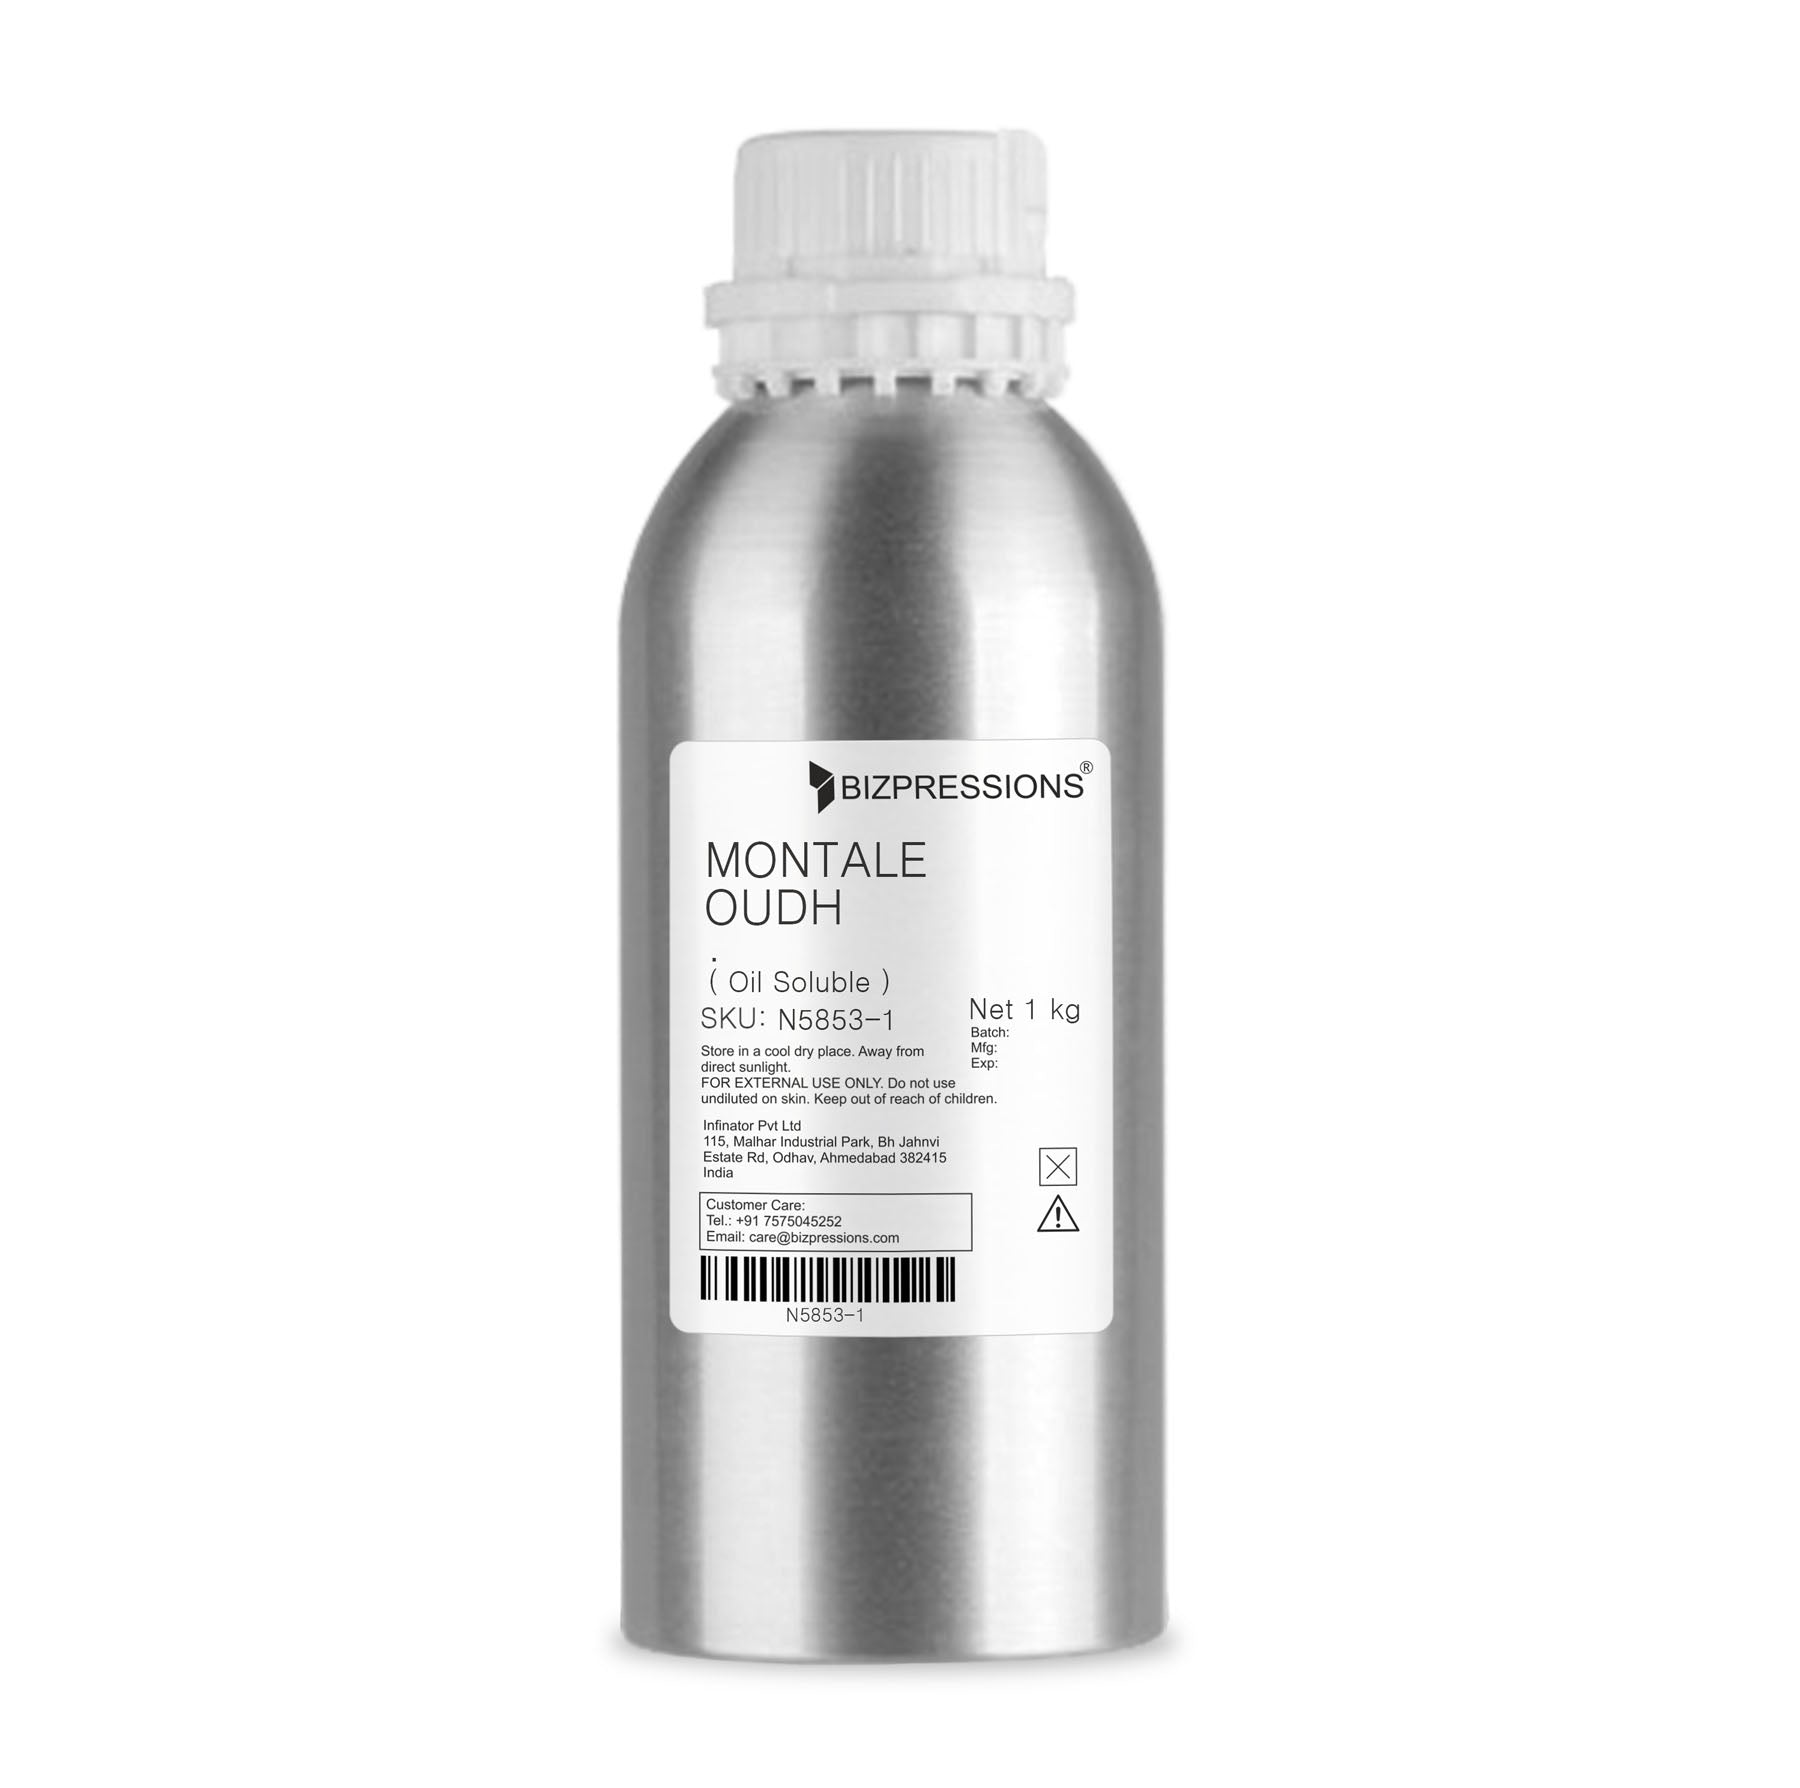 MONTALE OUDH - Fragrance ( Oil Soluble ) - 1 kg